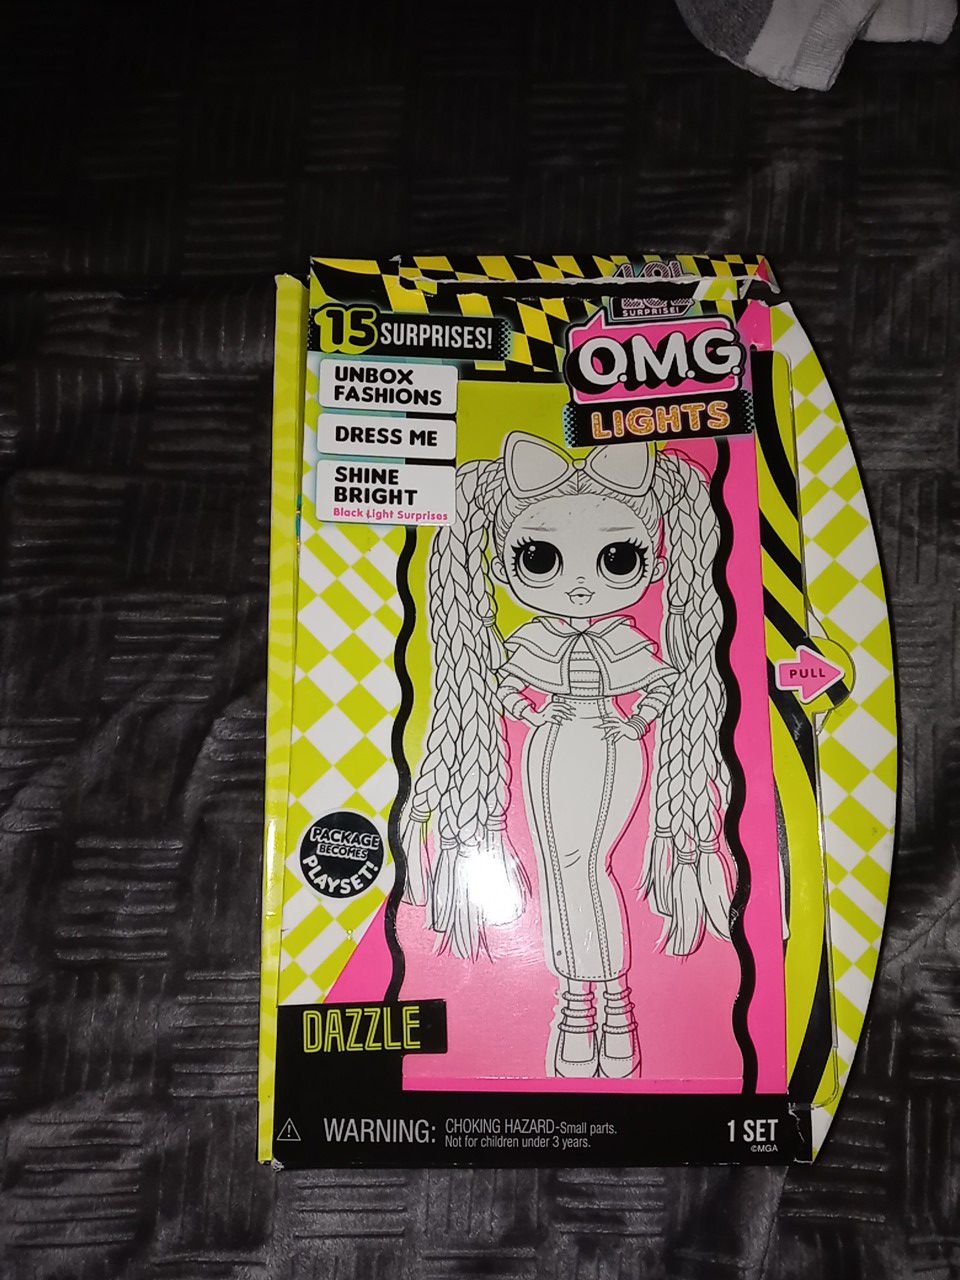 Dazzle dress up doll